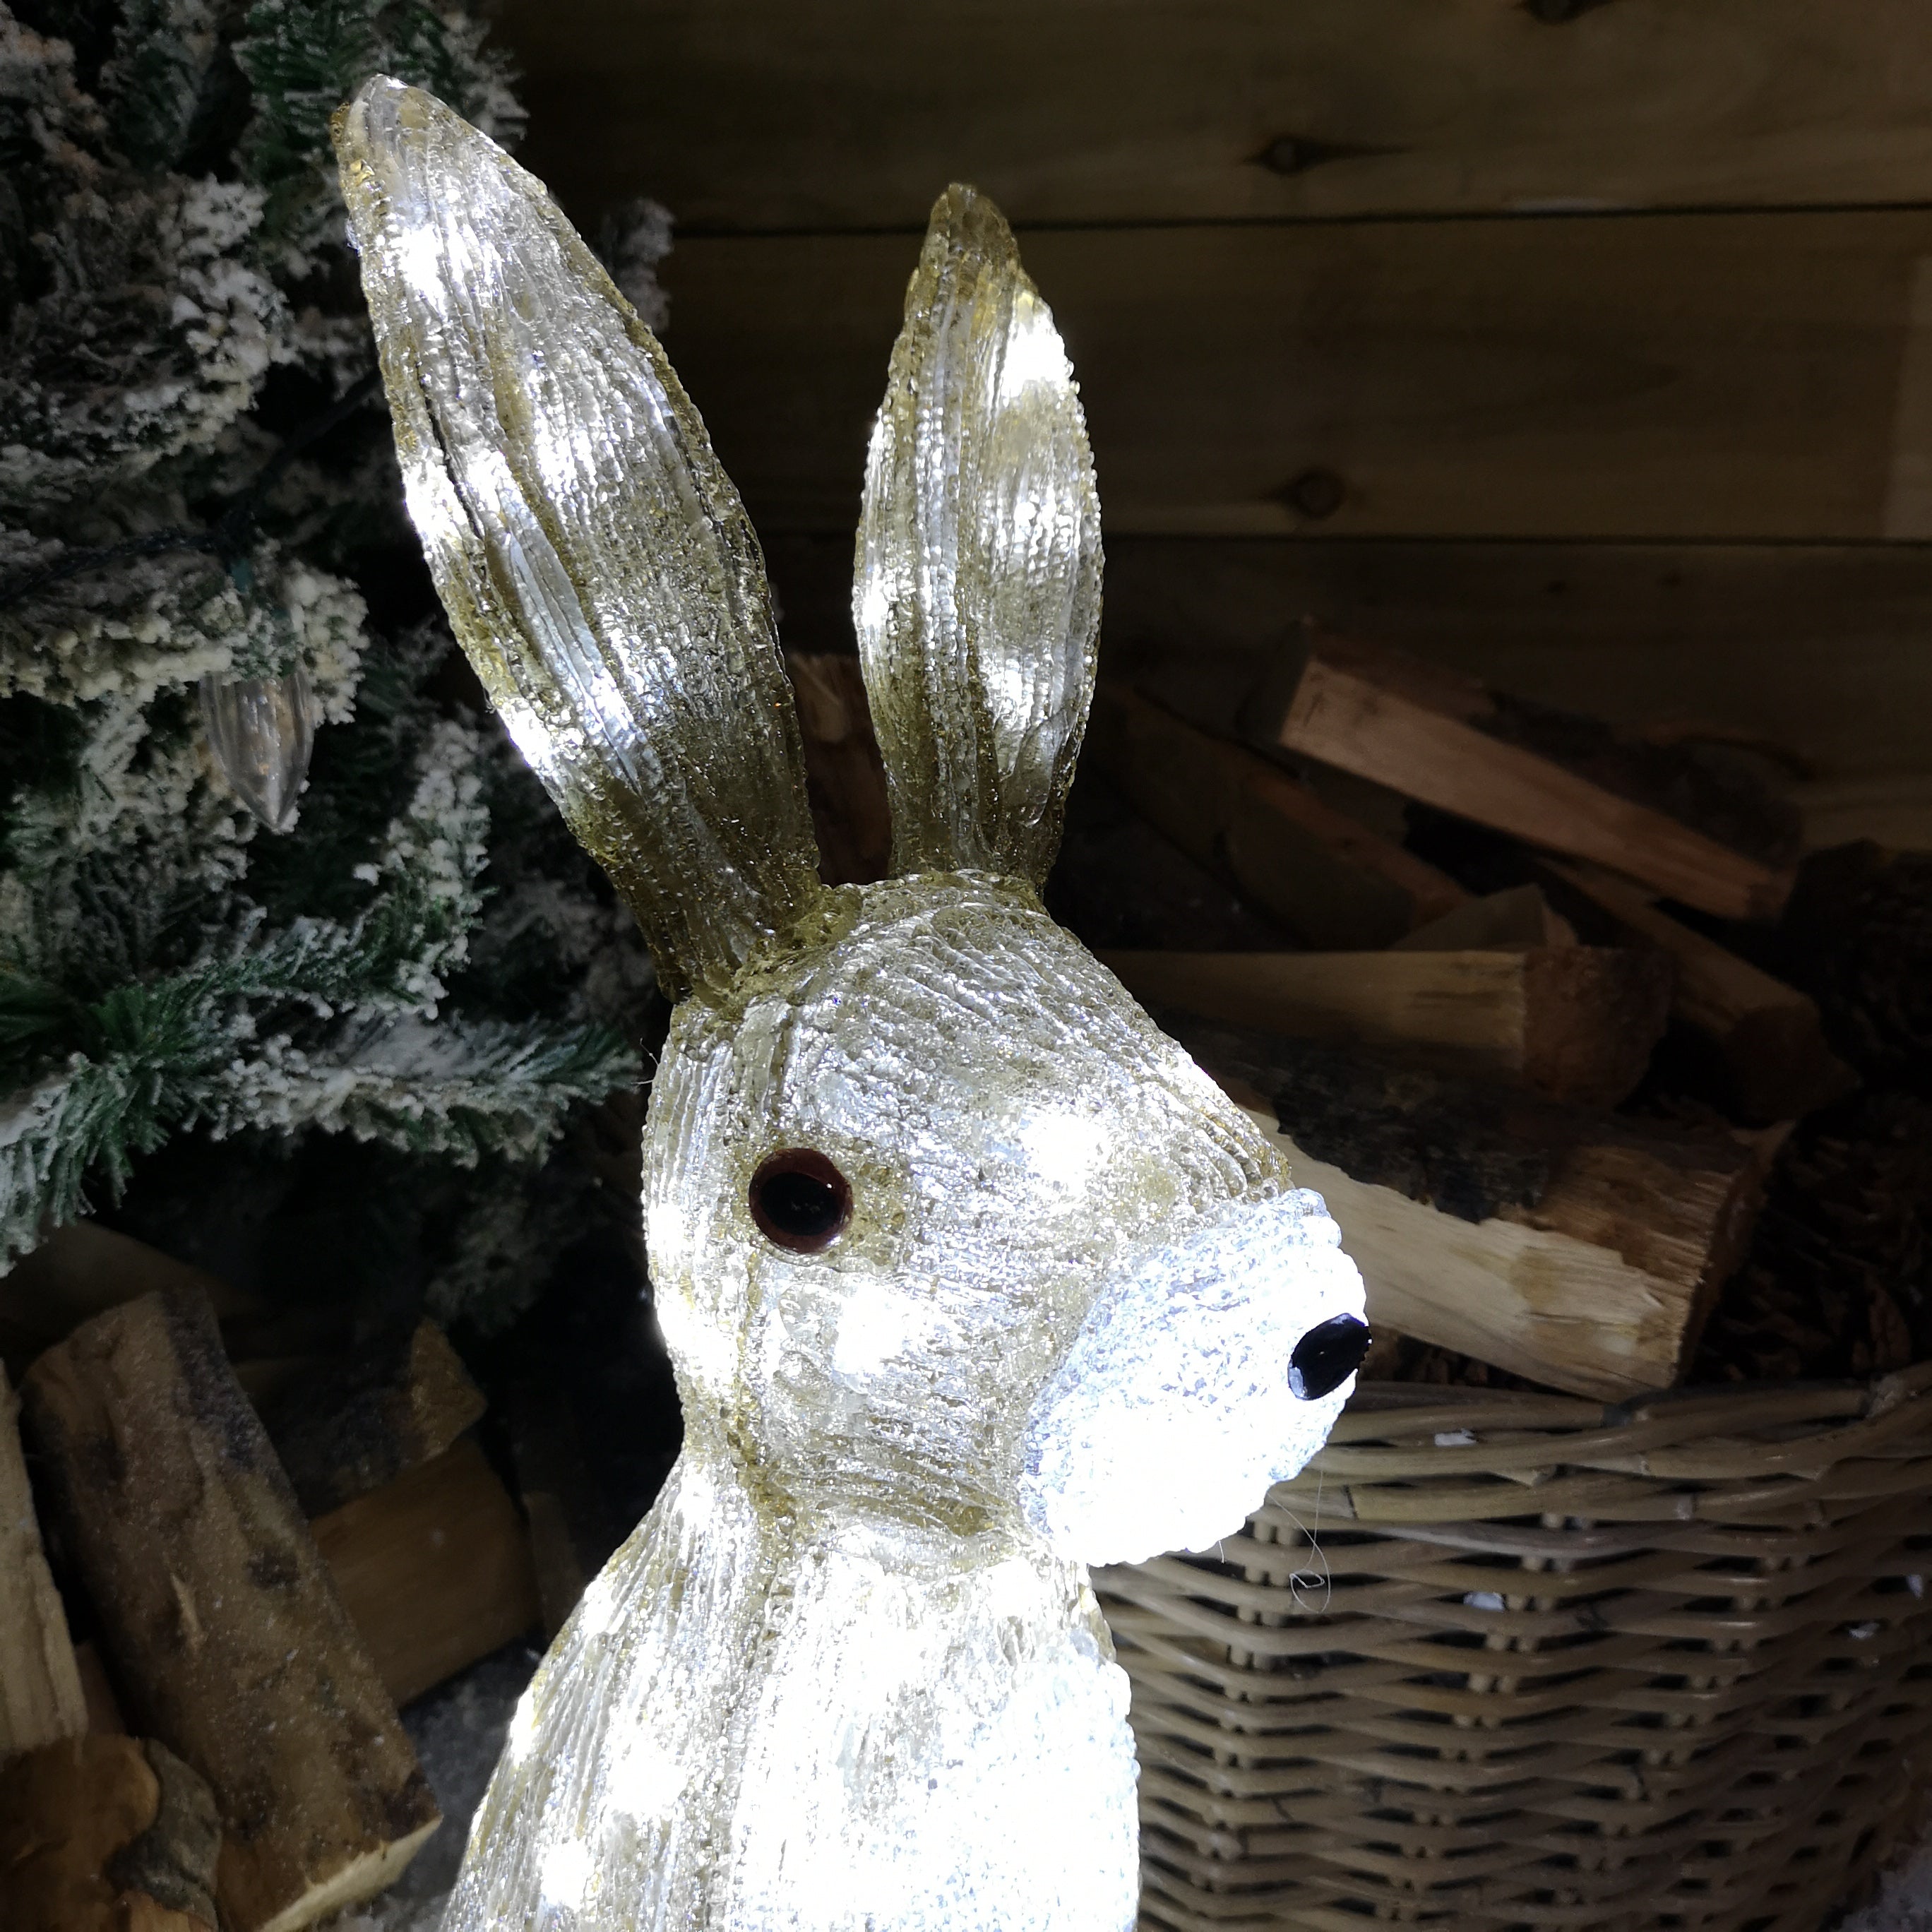 54cm Outdoor The Snowman Acrylic Christmas Hare / Rabbit Figure 80 LEDs